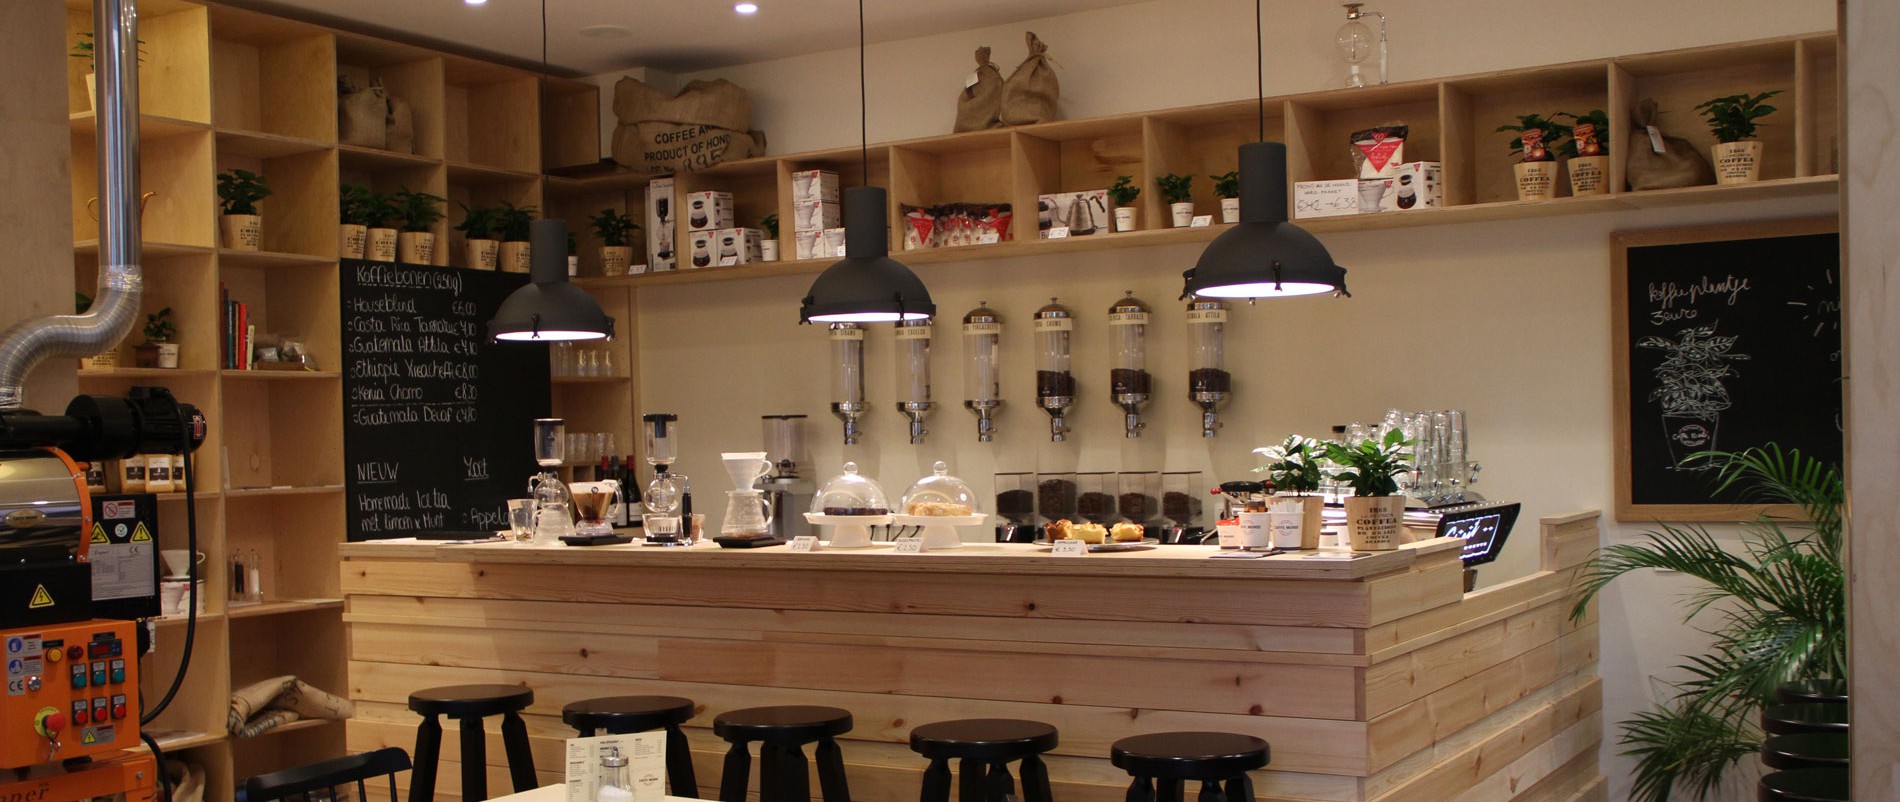 Caffe Mundi: Espressobar - Espressobar Antwerpen toog